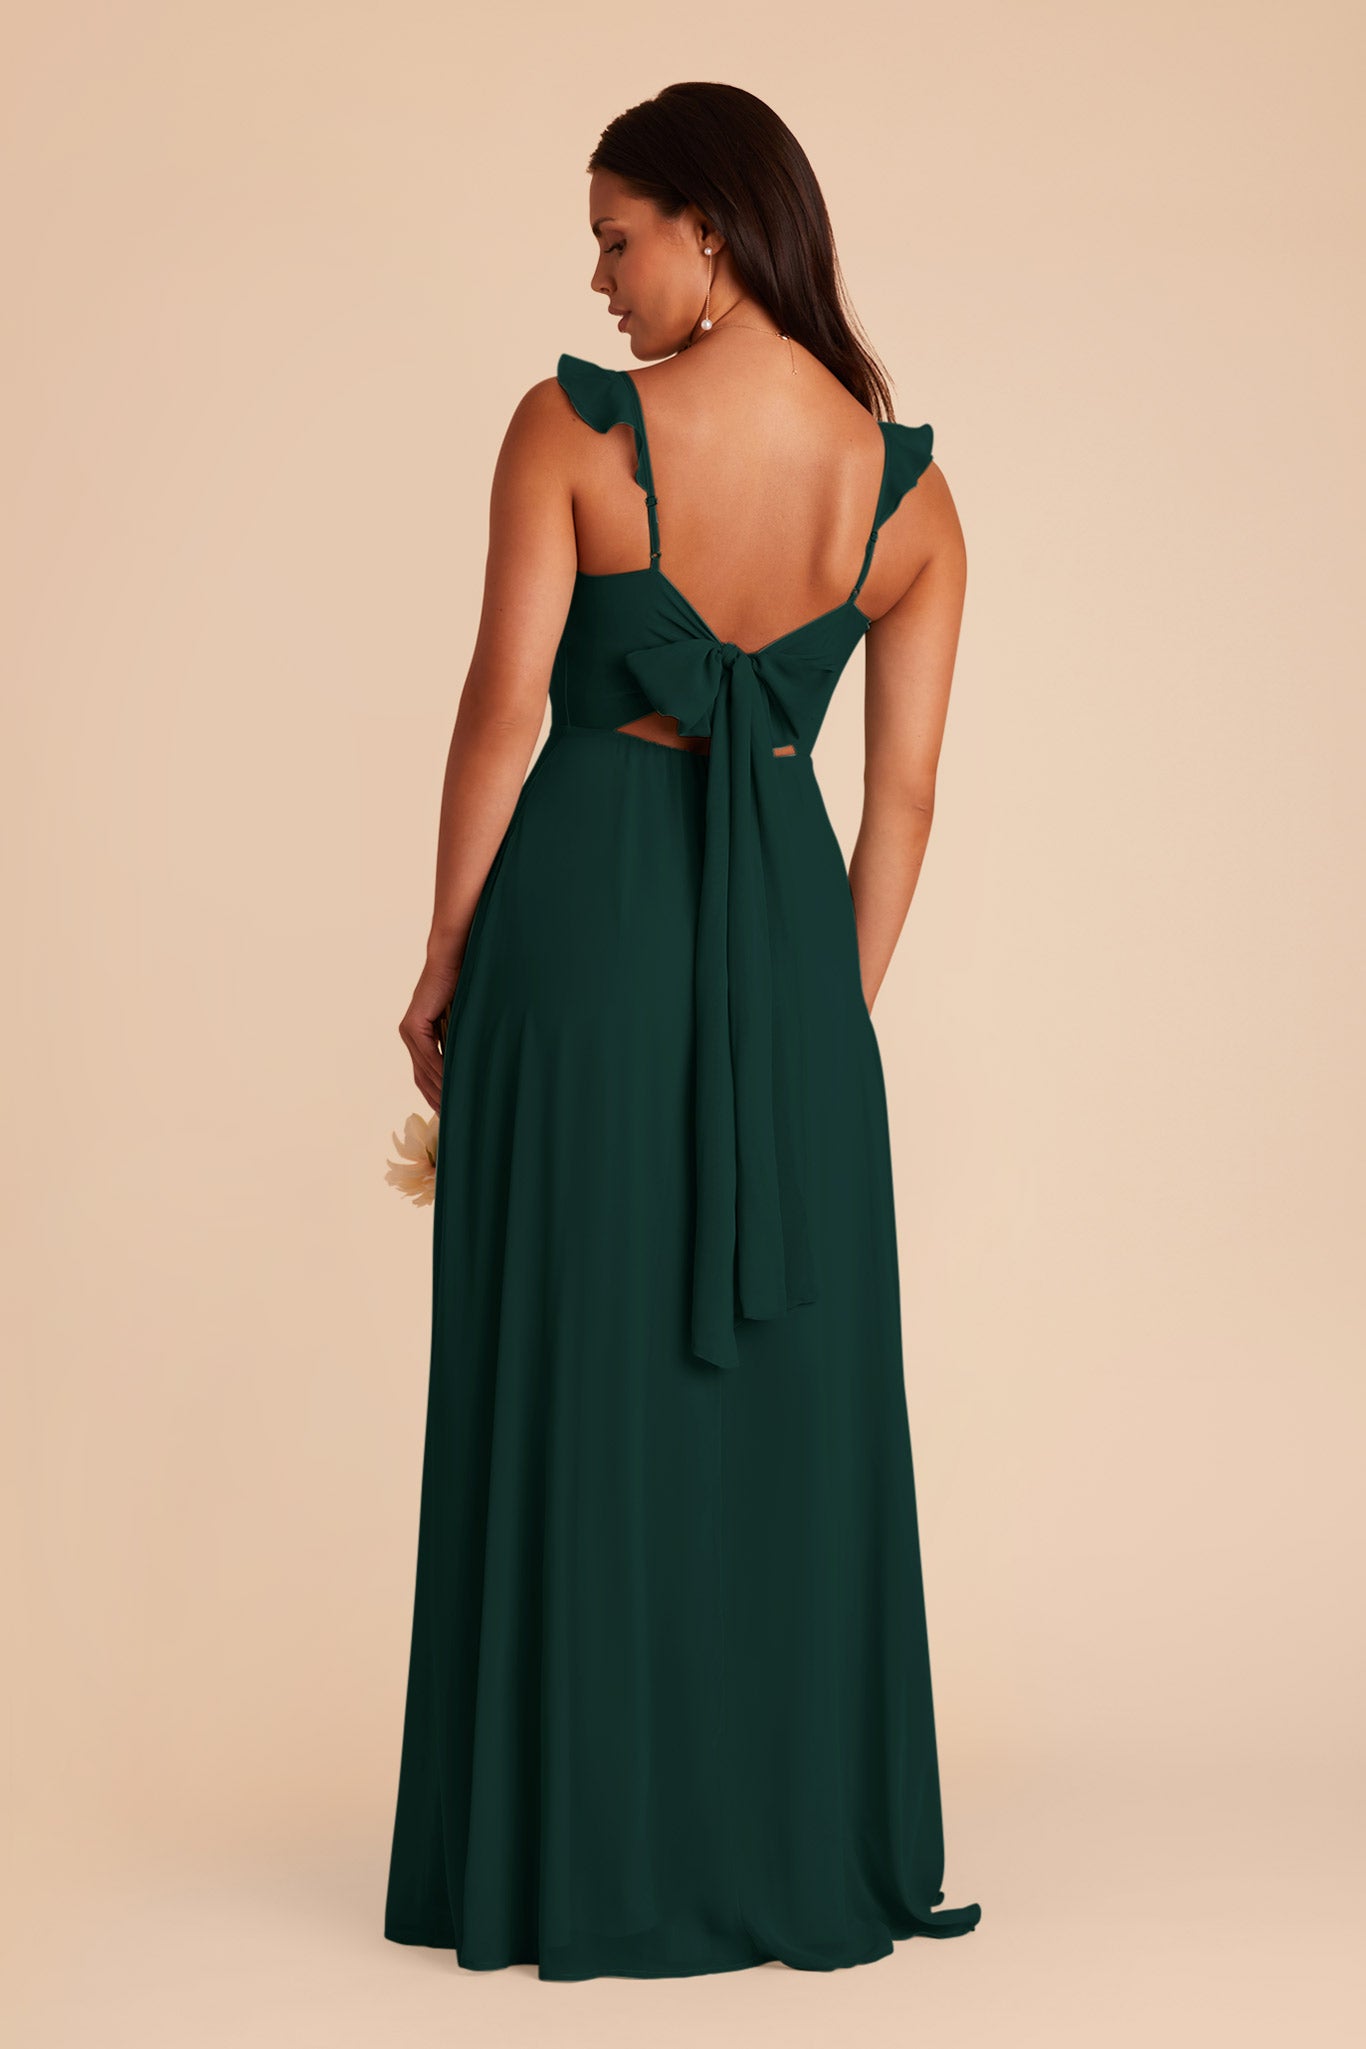 Emerald Doris Chiffon Dress by Birdy Grey